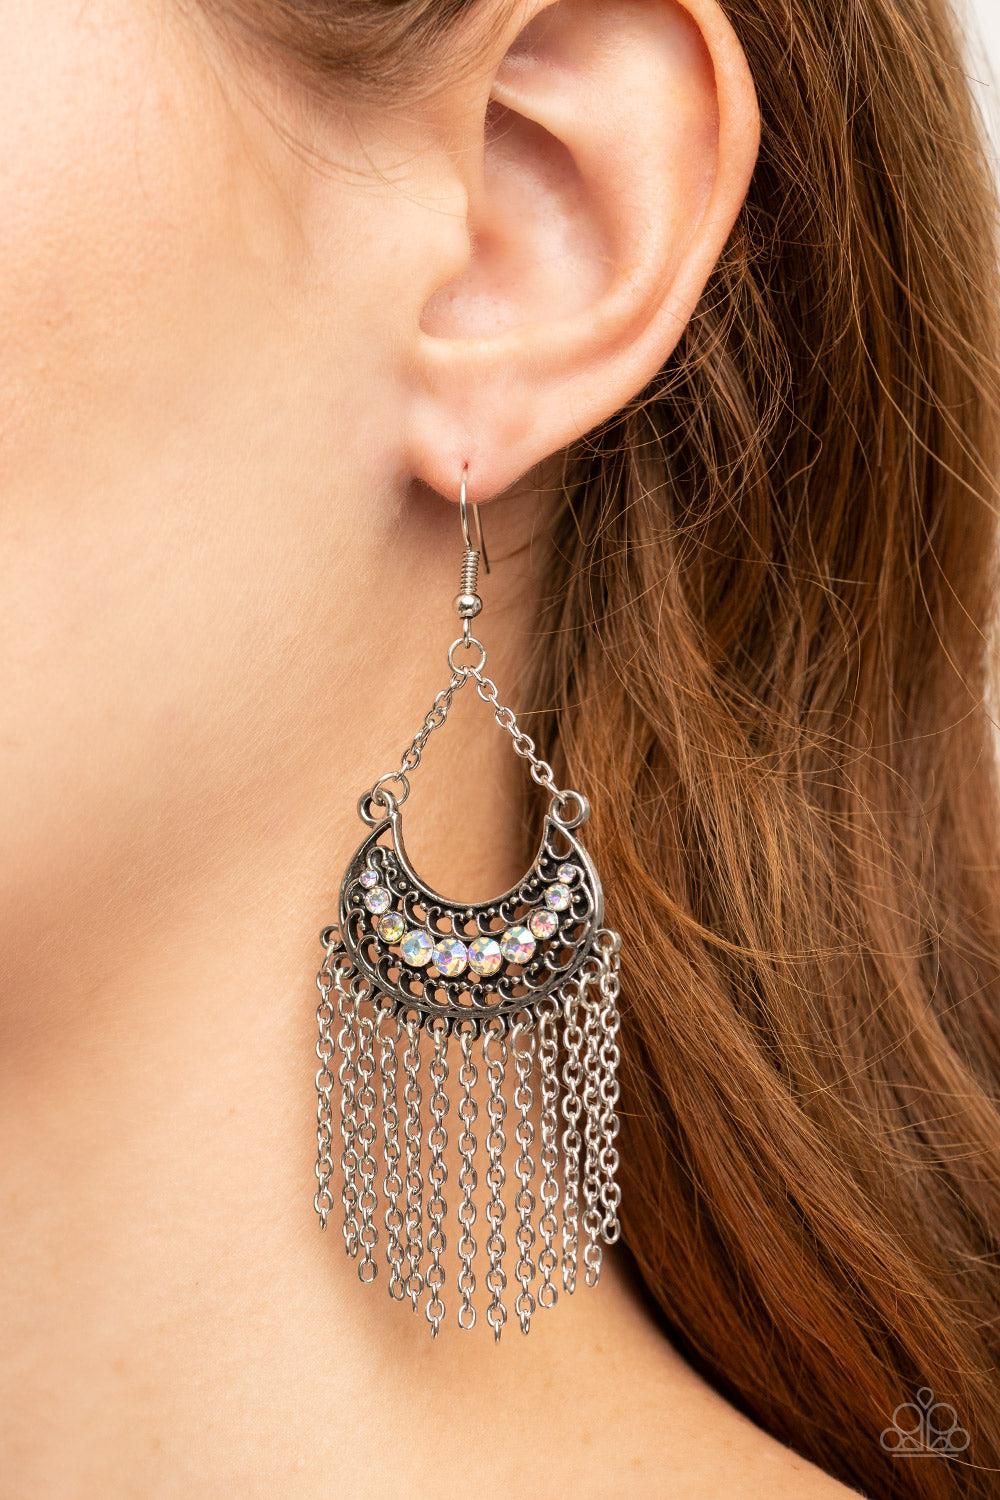 Greco Goddess Multi Iridescent Rhinestone Earrings - Paparazzi Accessories- lightbox - CarasShop.com - $5 Jewelry by Cara Jewels